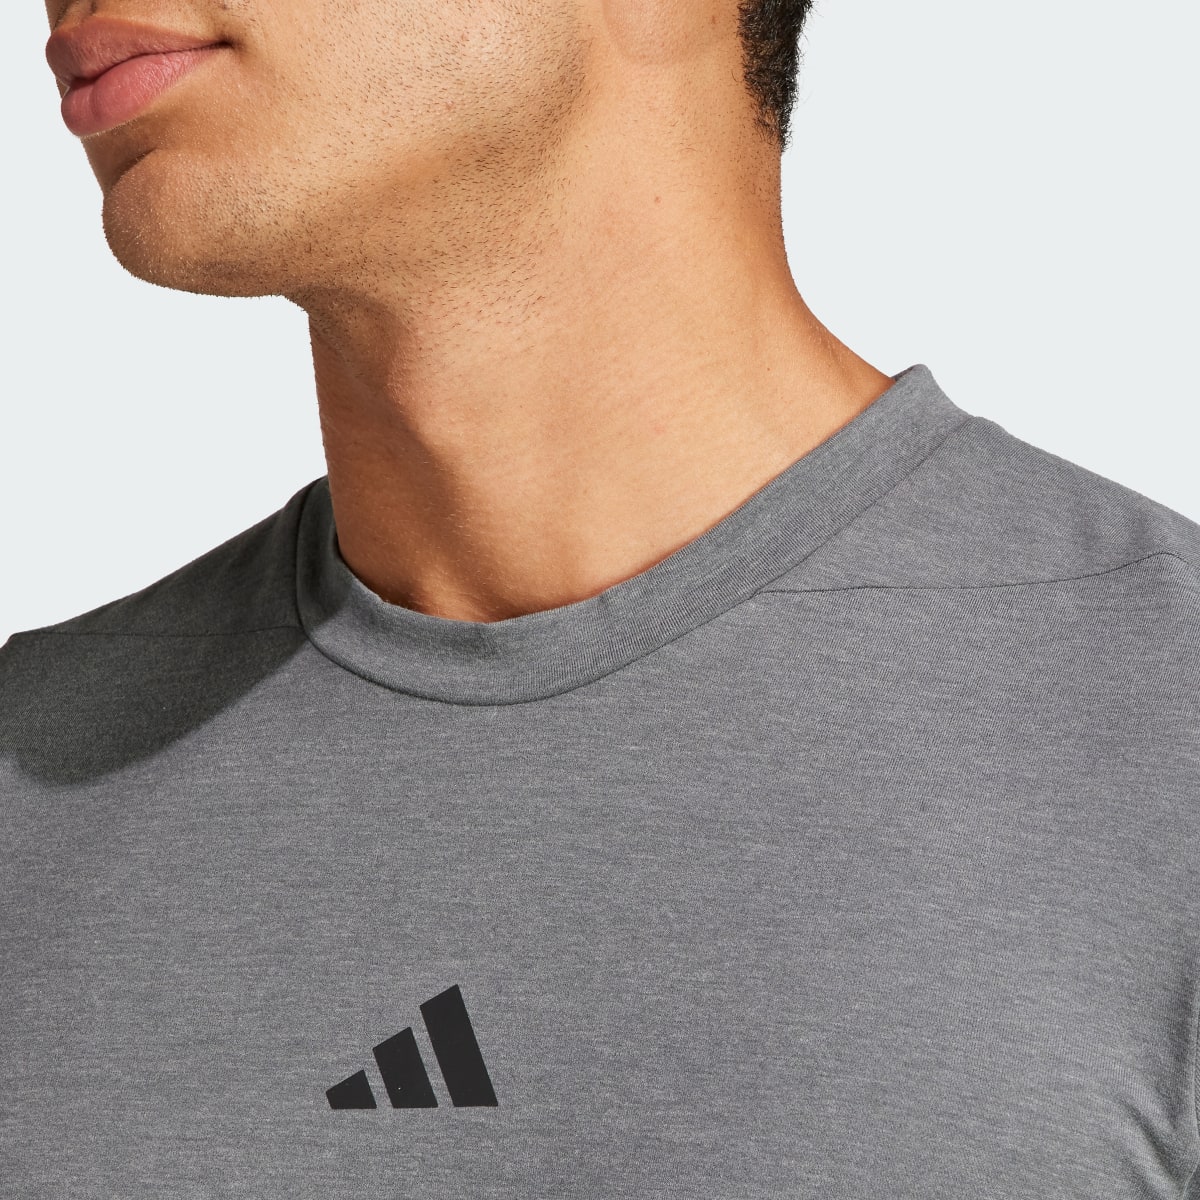 Adidas T-shirt Designed for Training Workout. 7